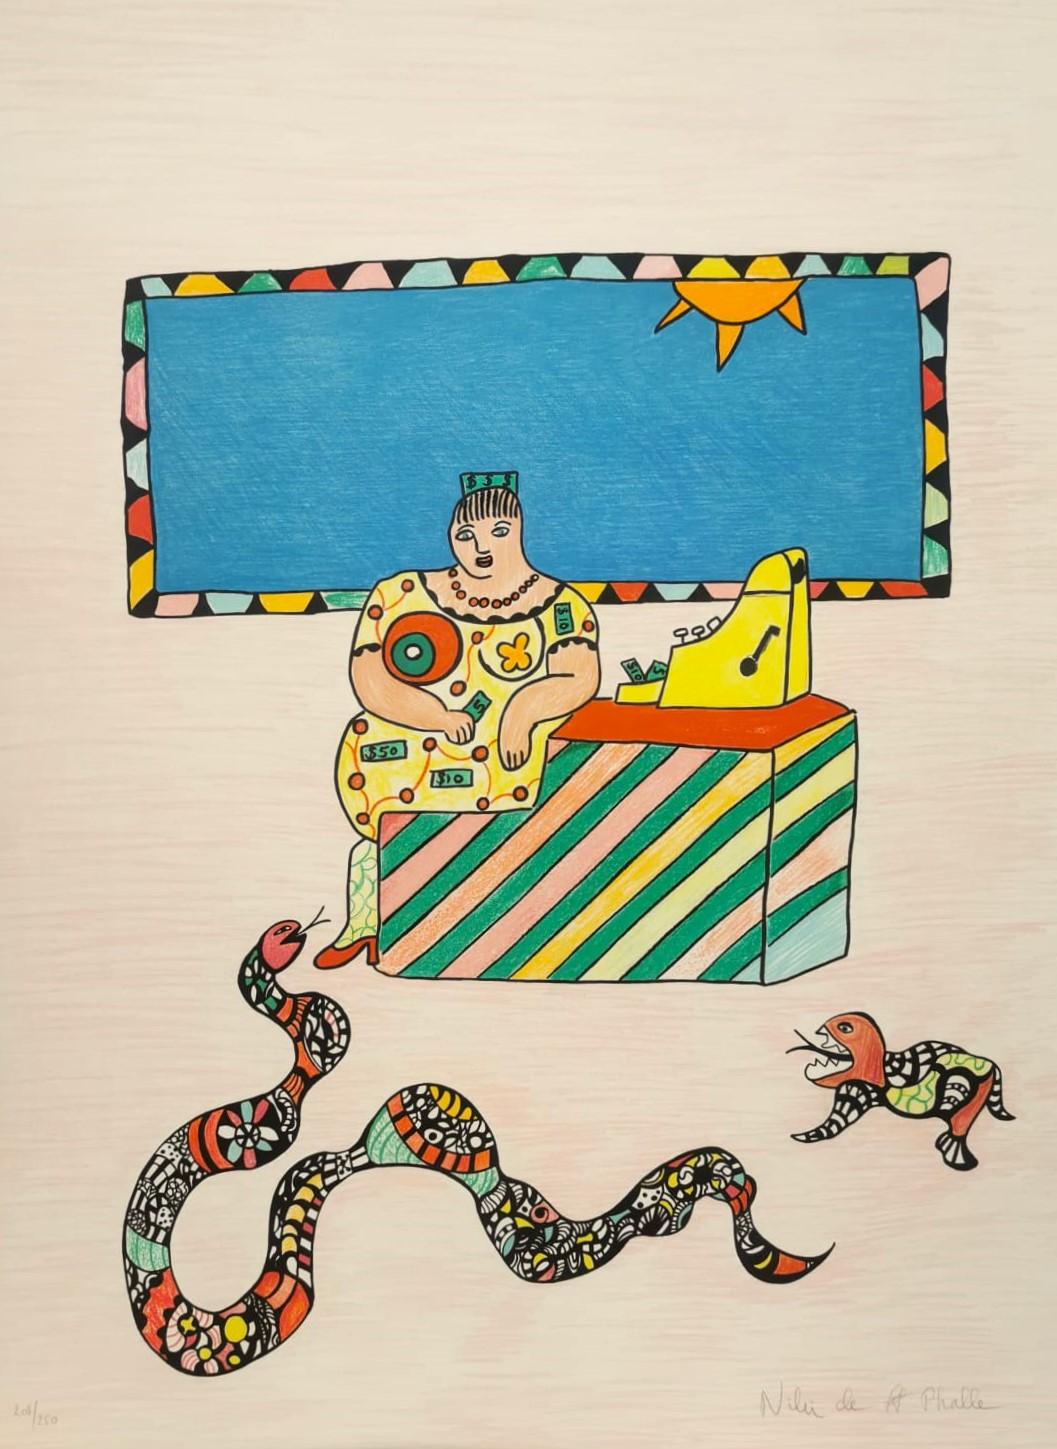 Niki de Saint Phalle Abstract Print - The Cashier 